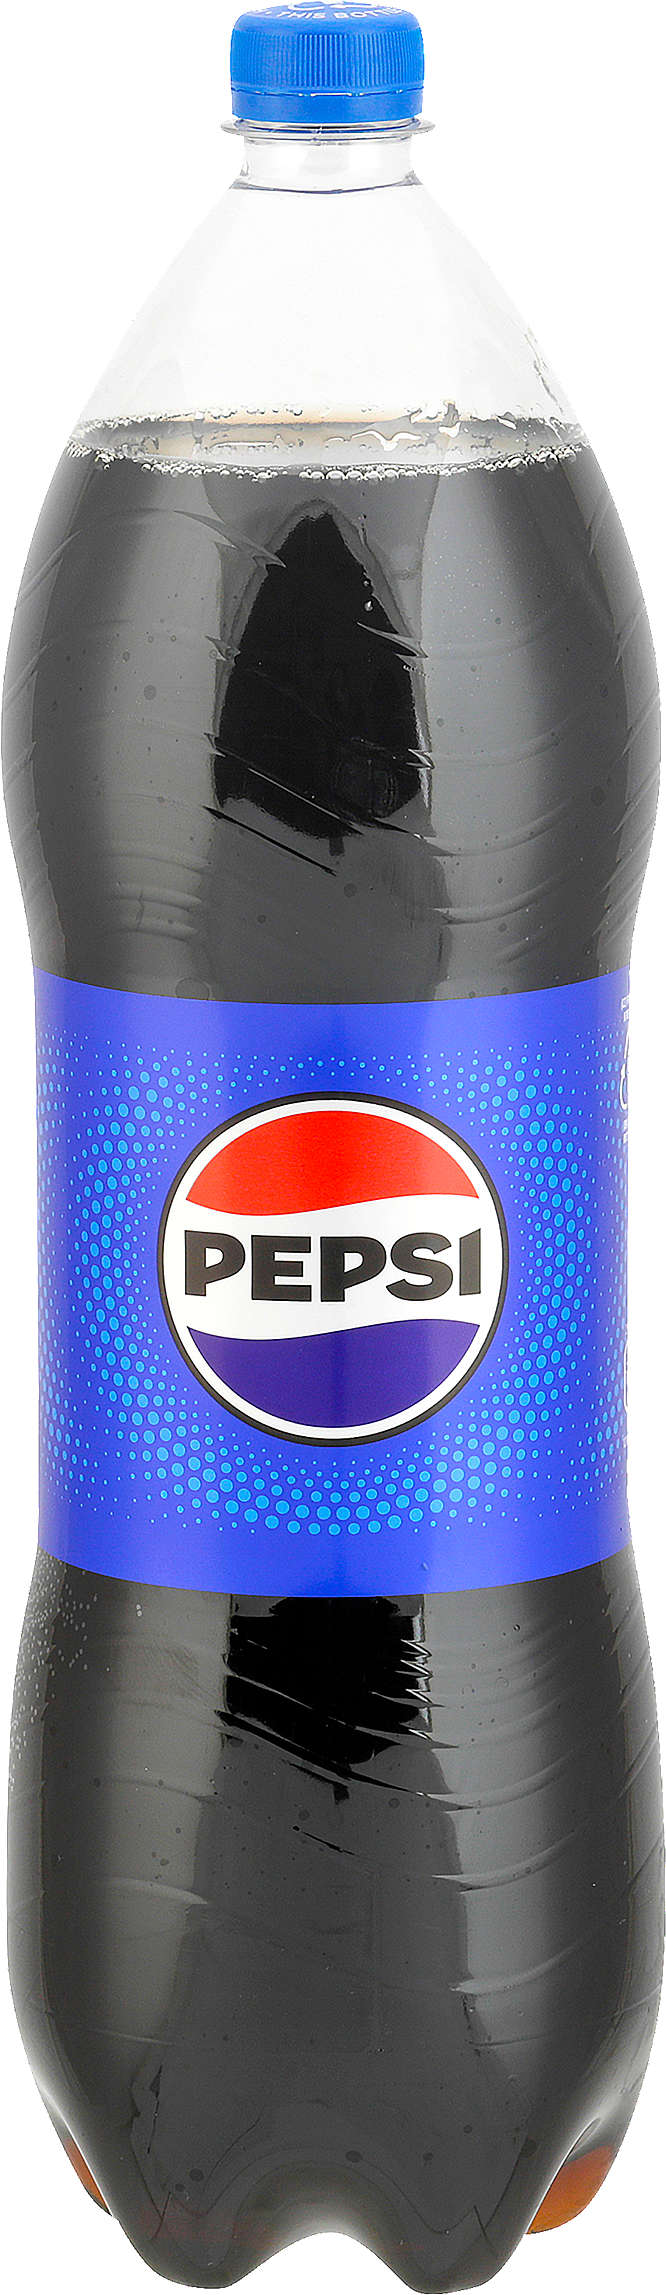 Zobrazit nabídku Pepsi/Pepsi MAX/ Mirinda/7UP Limonáda